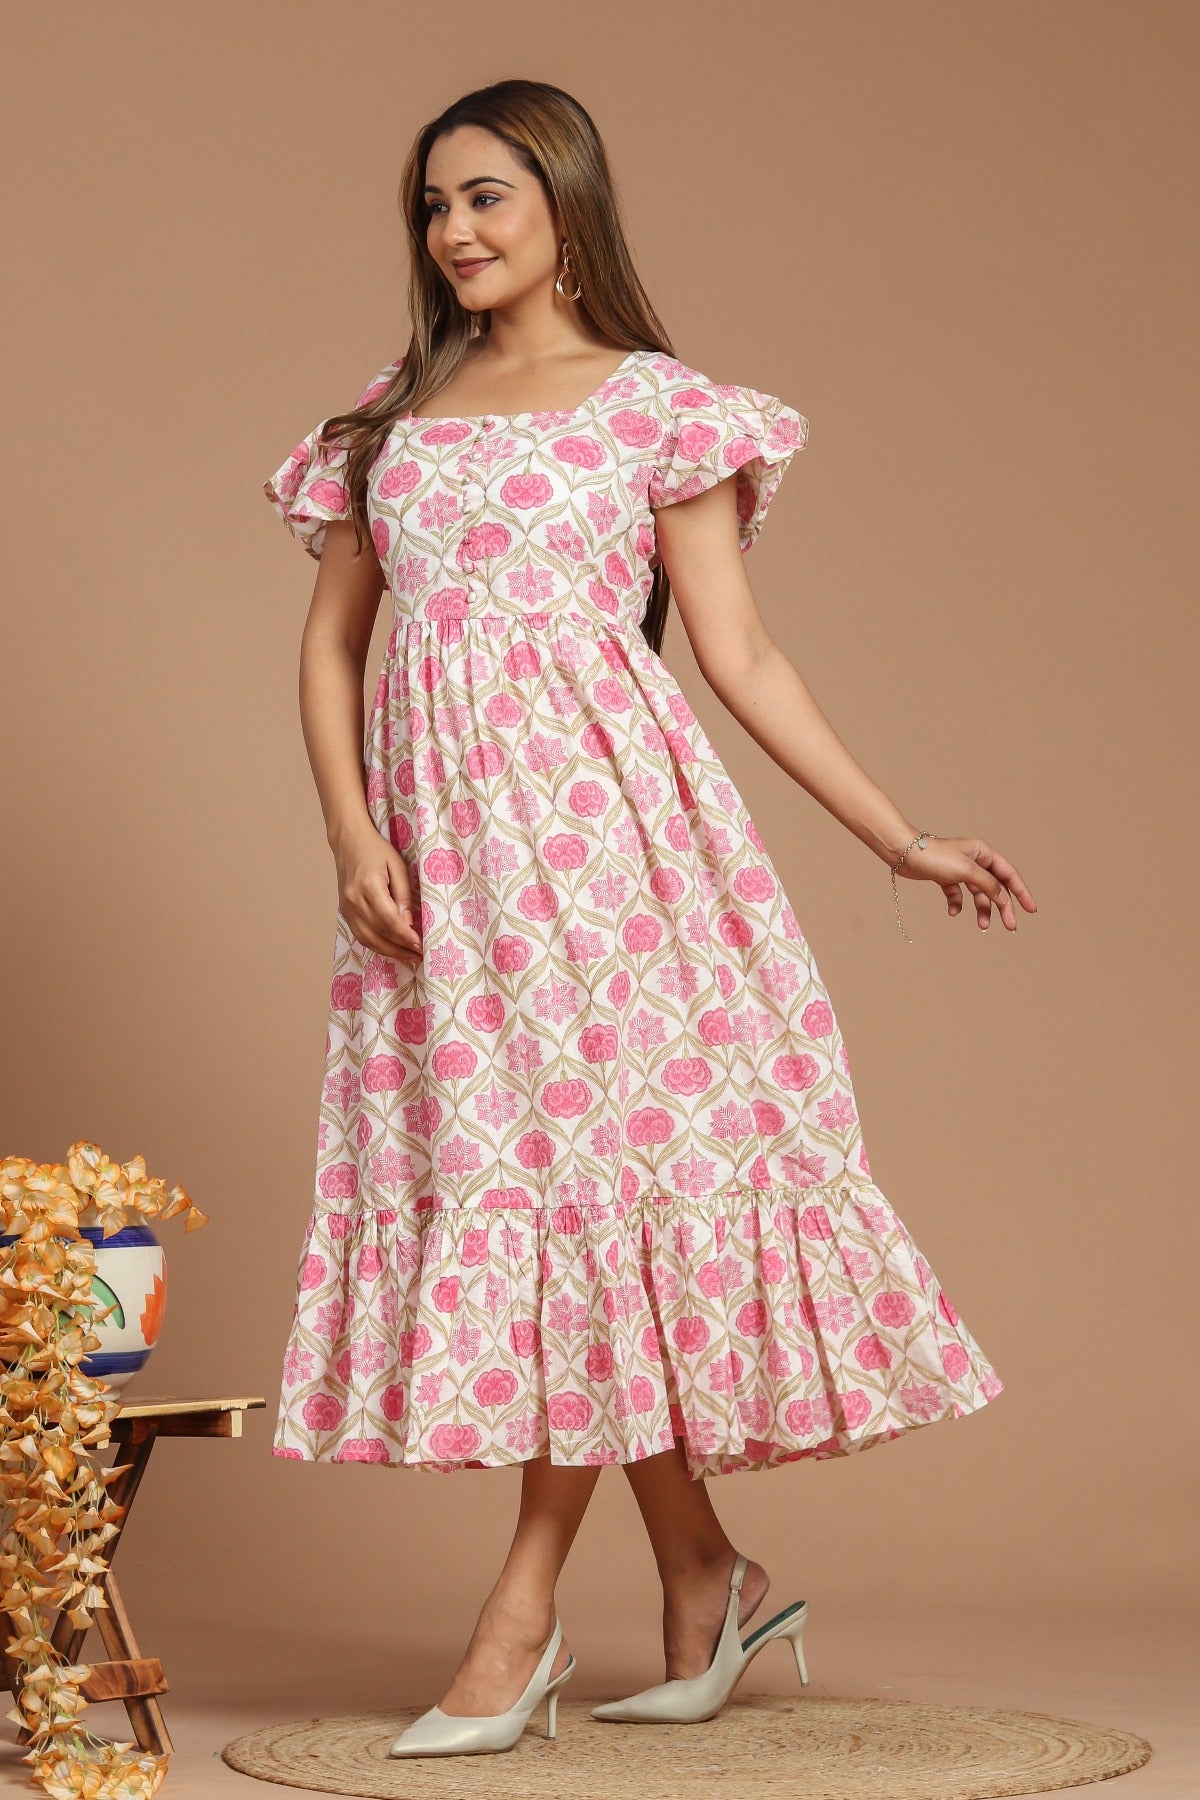 Blushing Blossom Block Printed Dress